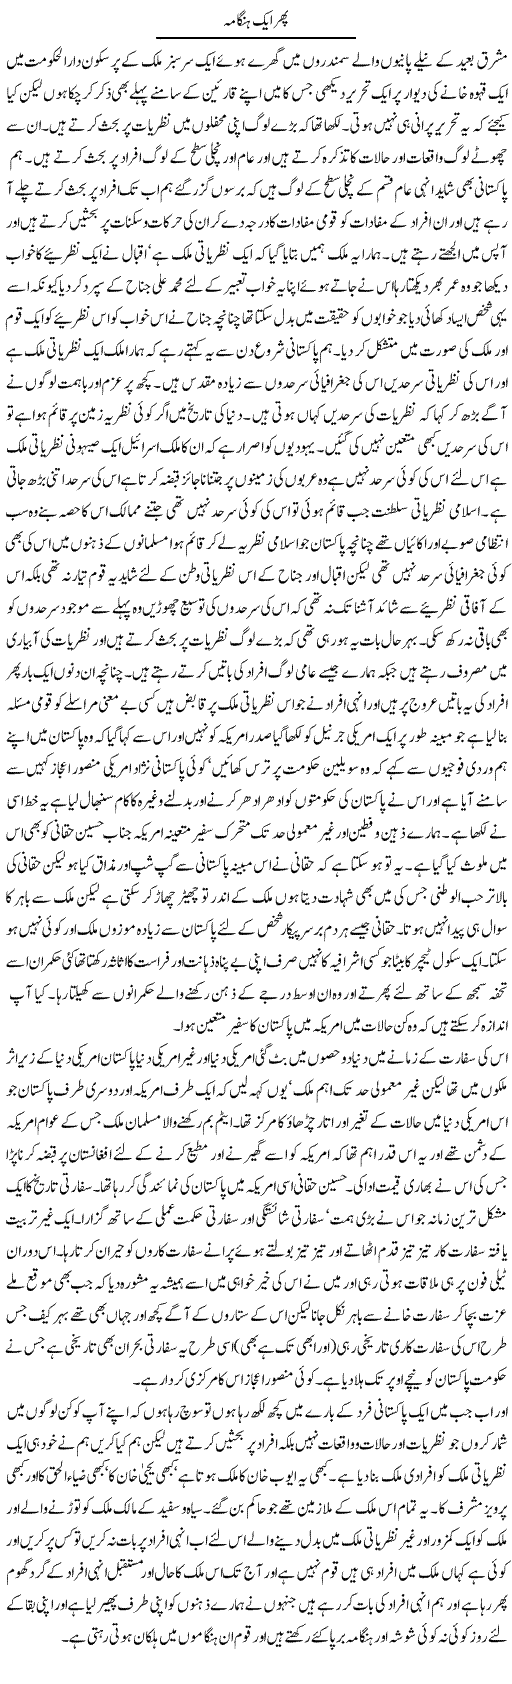 Ideology of Pakistan Express Column Abdul Qadir 20 November 2011